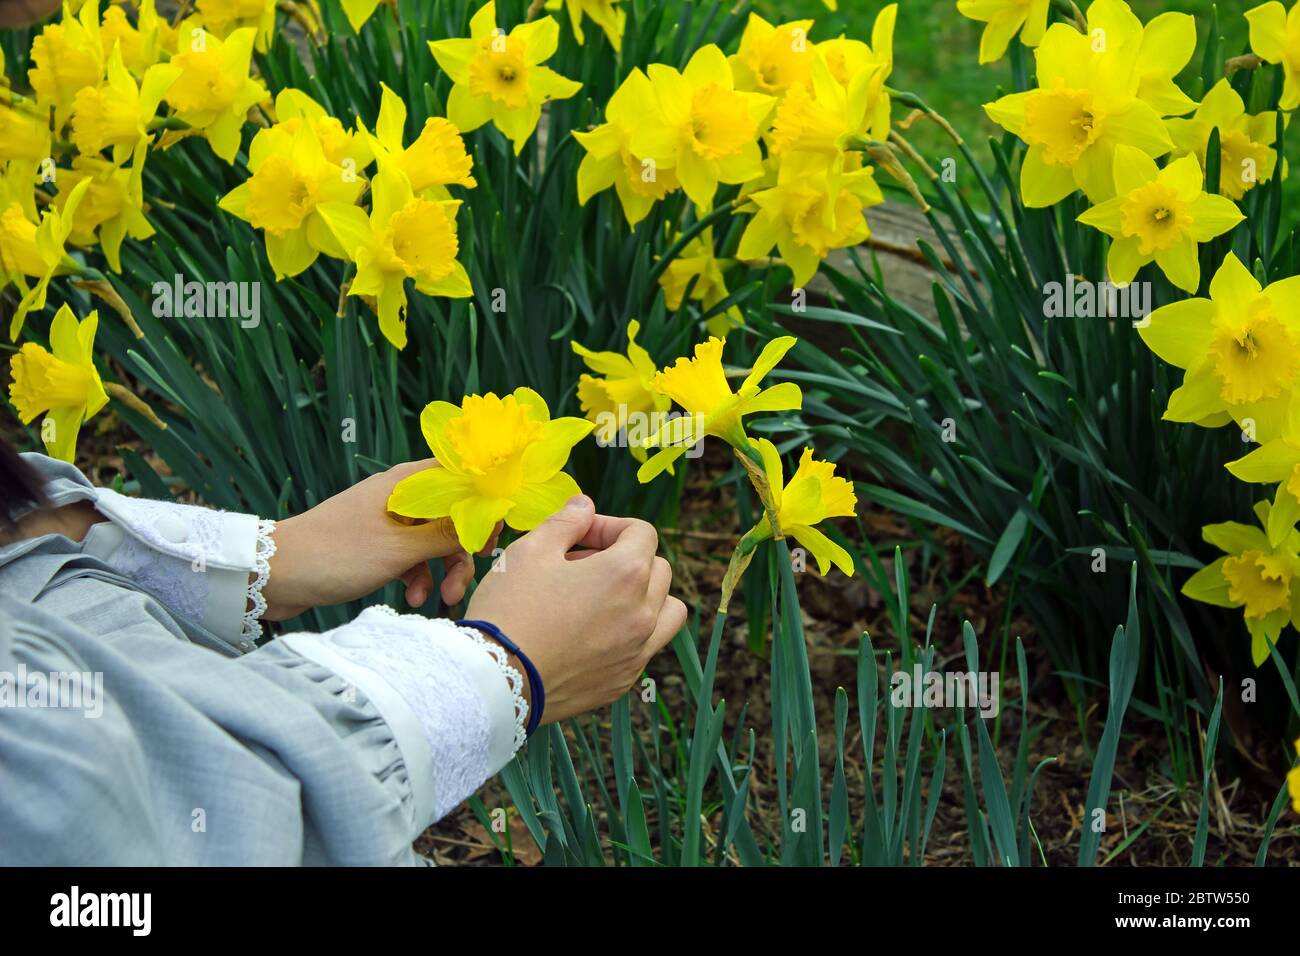 Young woman admiring daffodils Stock Photo